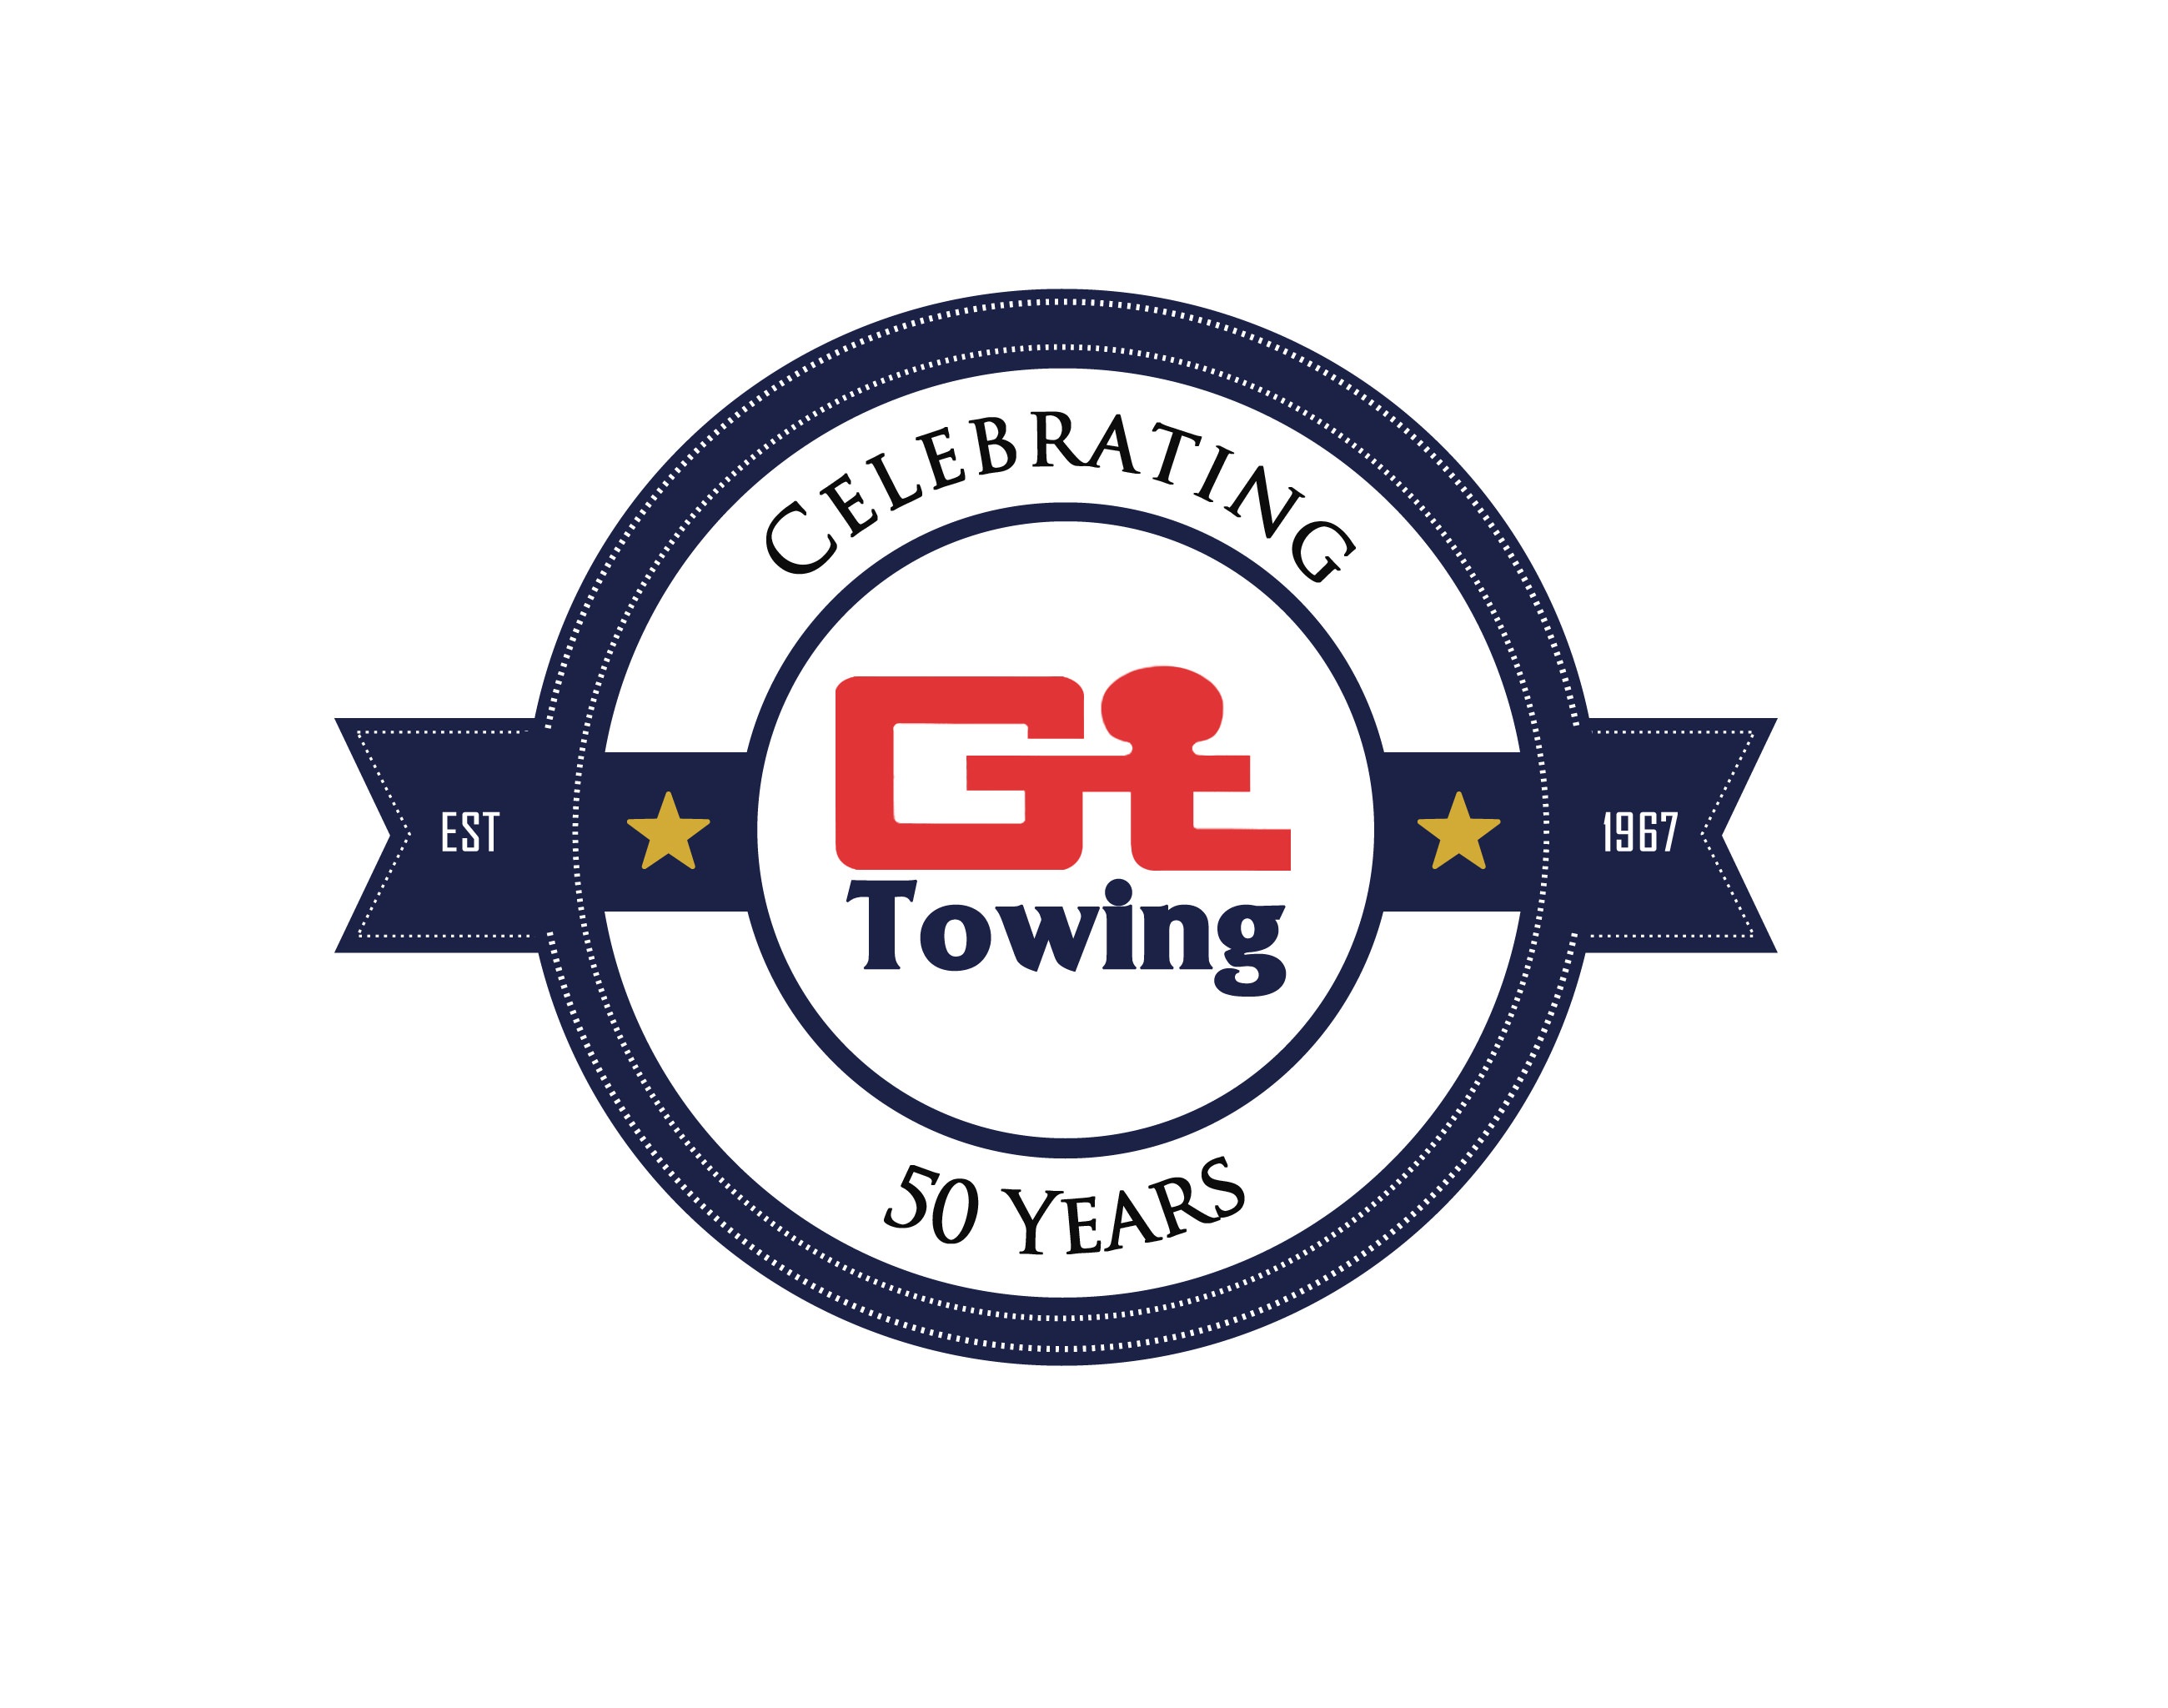 GT Towing Ltd celebrates 50 years in establishment!